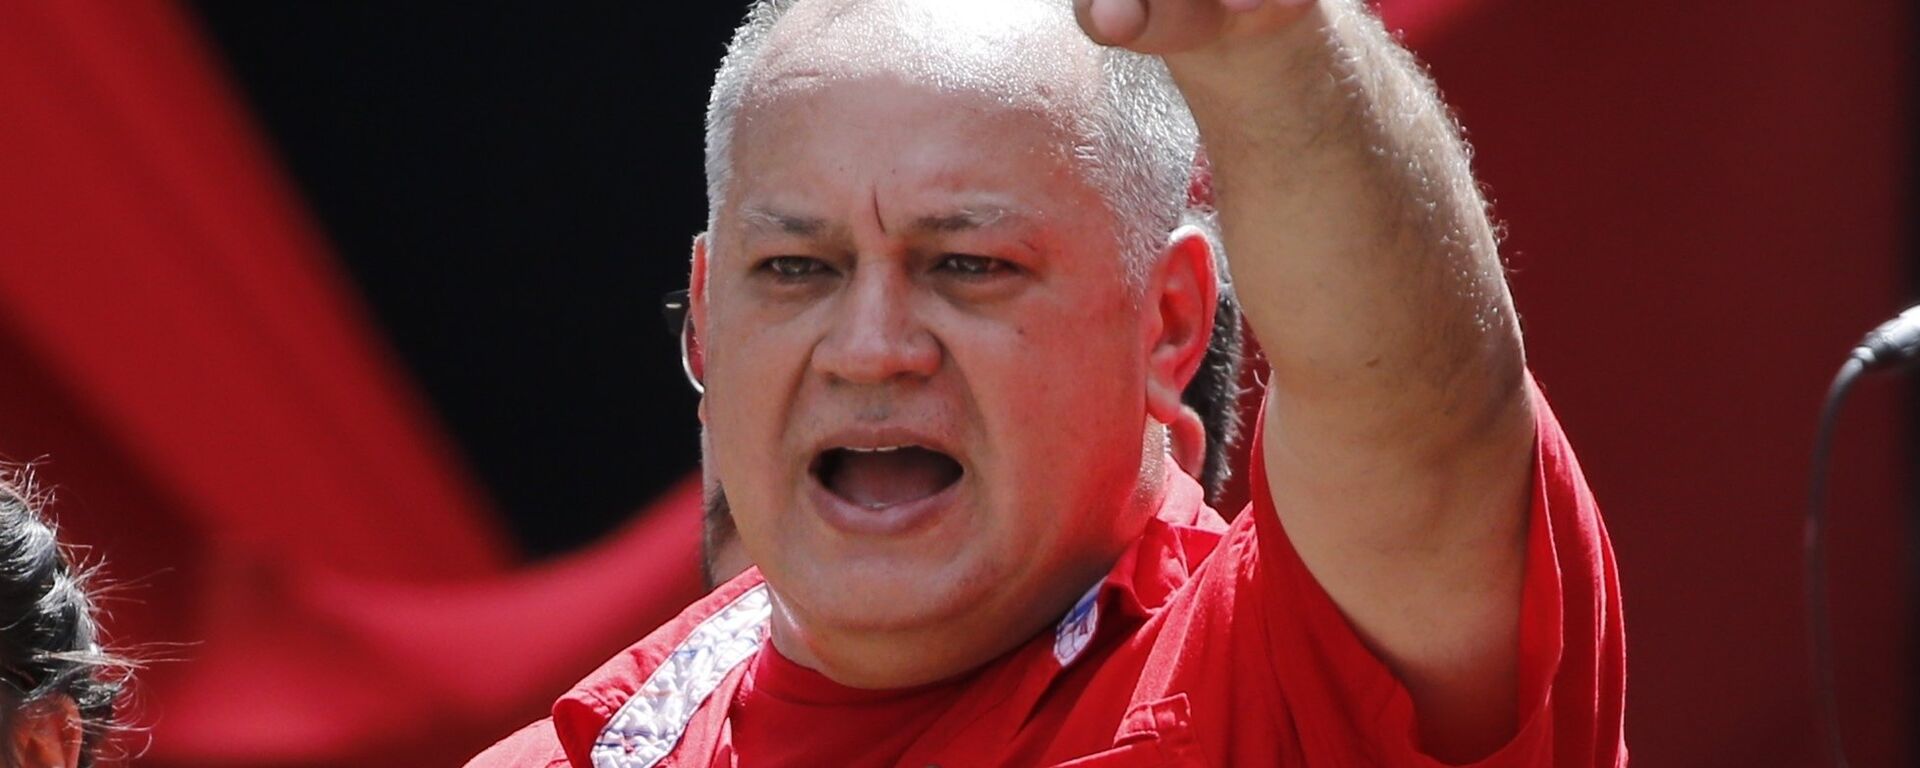 Diosdado Cabello, presidente de la Asamblea Nacional Constituyente de Venezuela - Sputnik Mundo, 1920, 30.06.2020